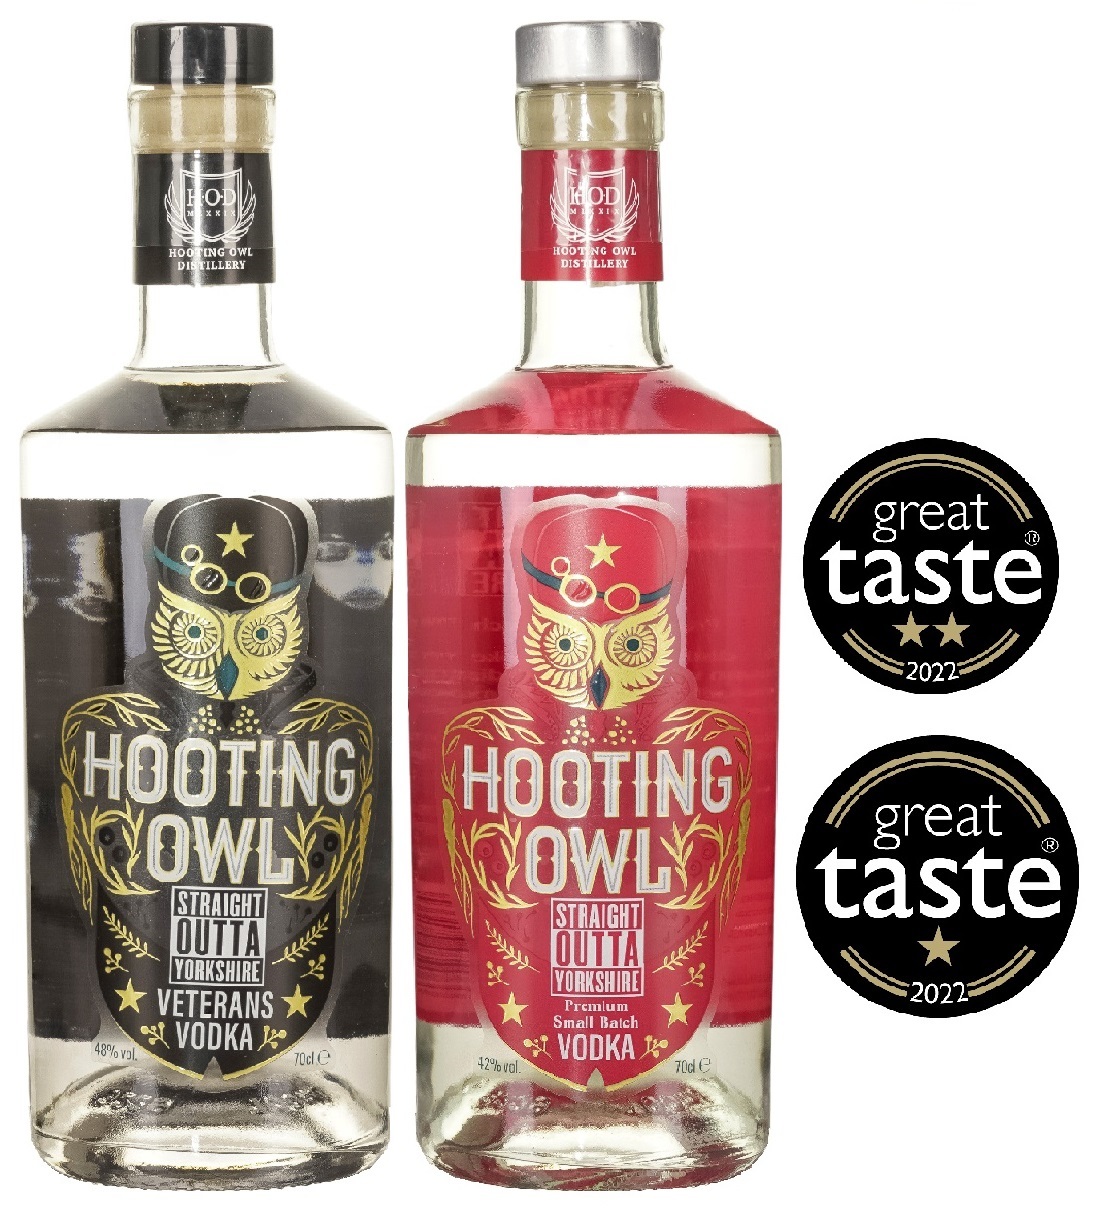 Hooting Owl Yorkshire Vodka